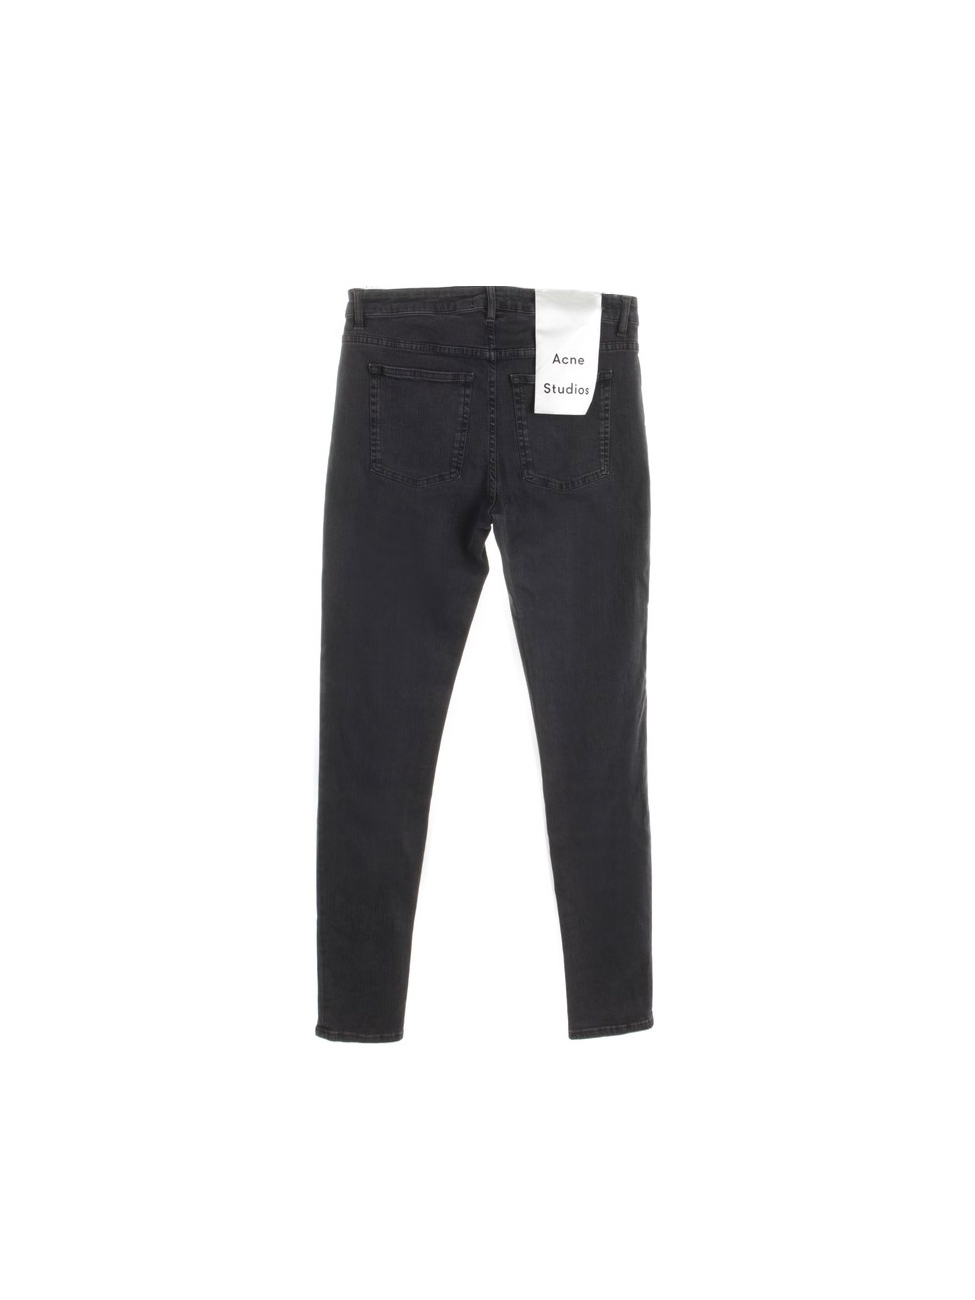 Boutique ACNE STUDIOS " Skin 5 Pocket Used Black " mid-rise skinny dark grey jeans Retail price $220 30/34